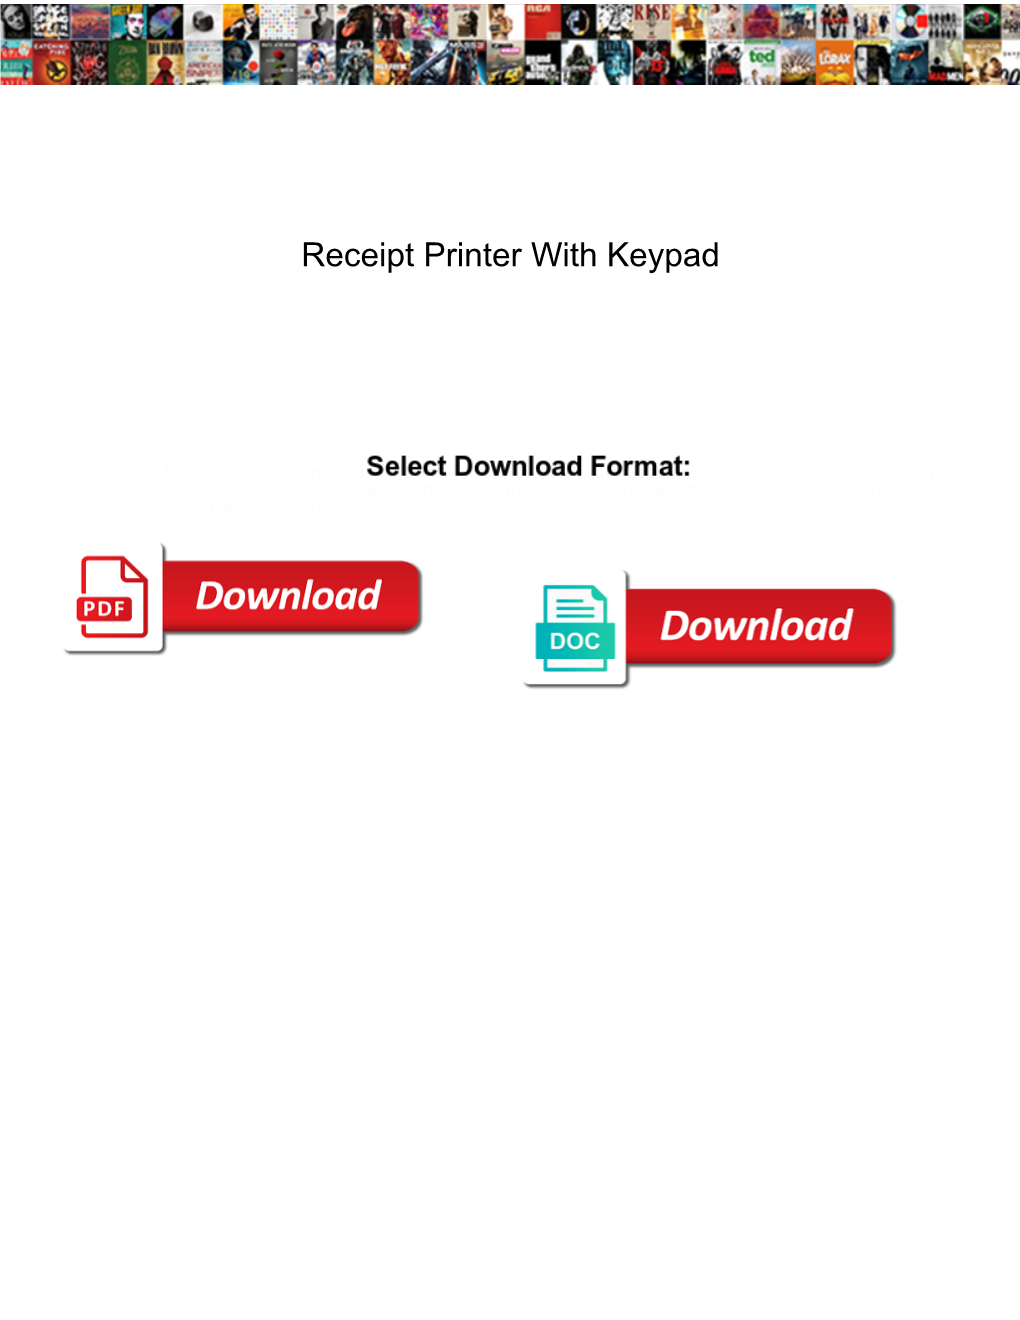 Receipt Printer with Keypad